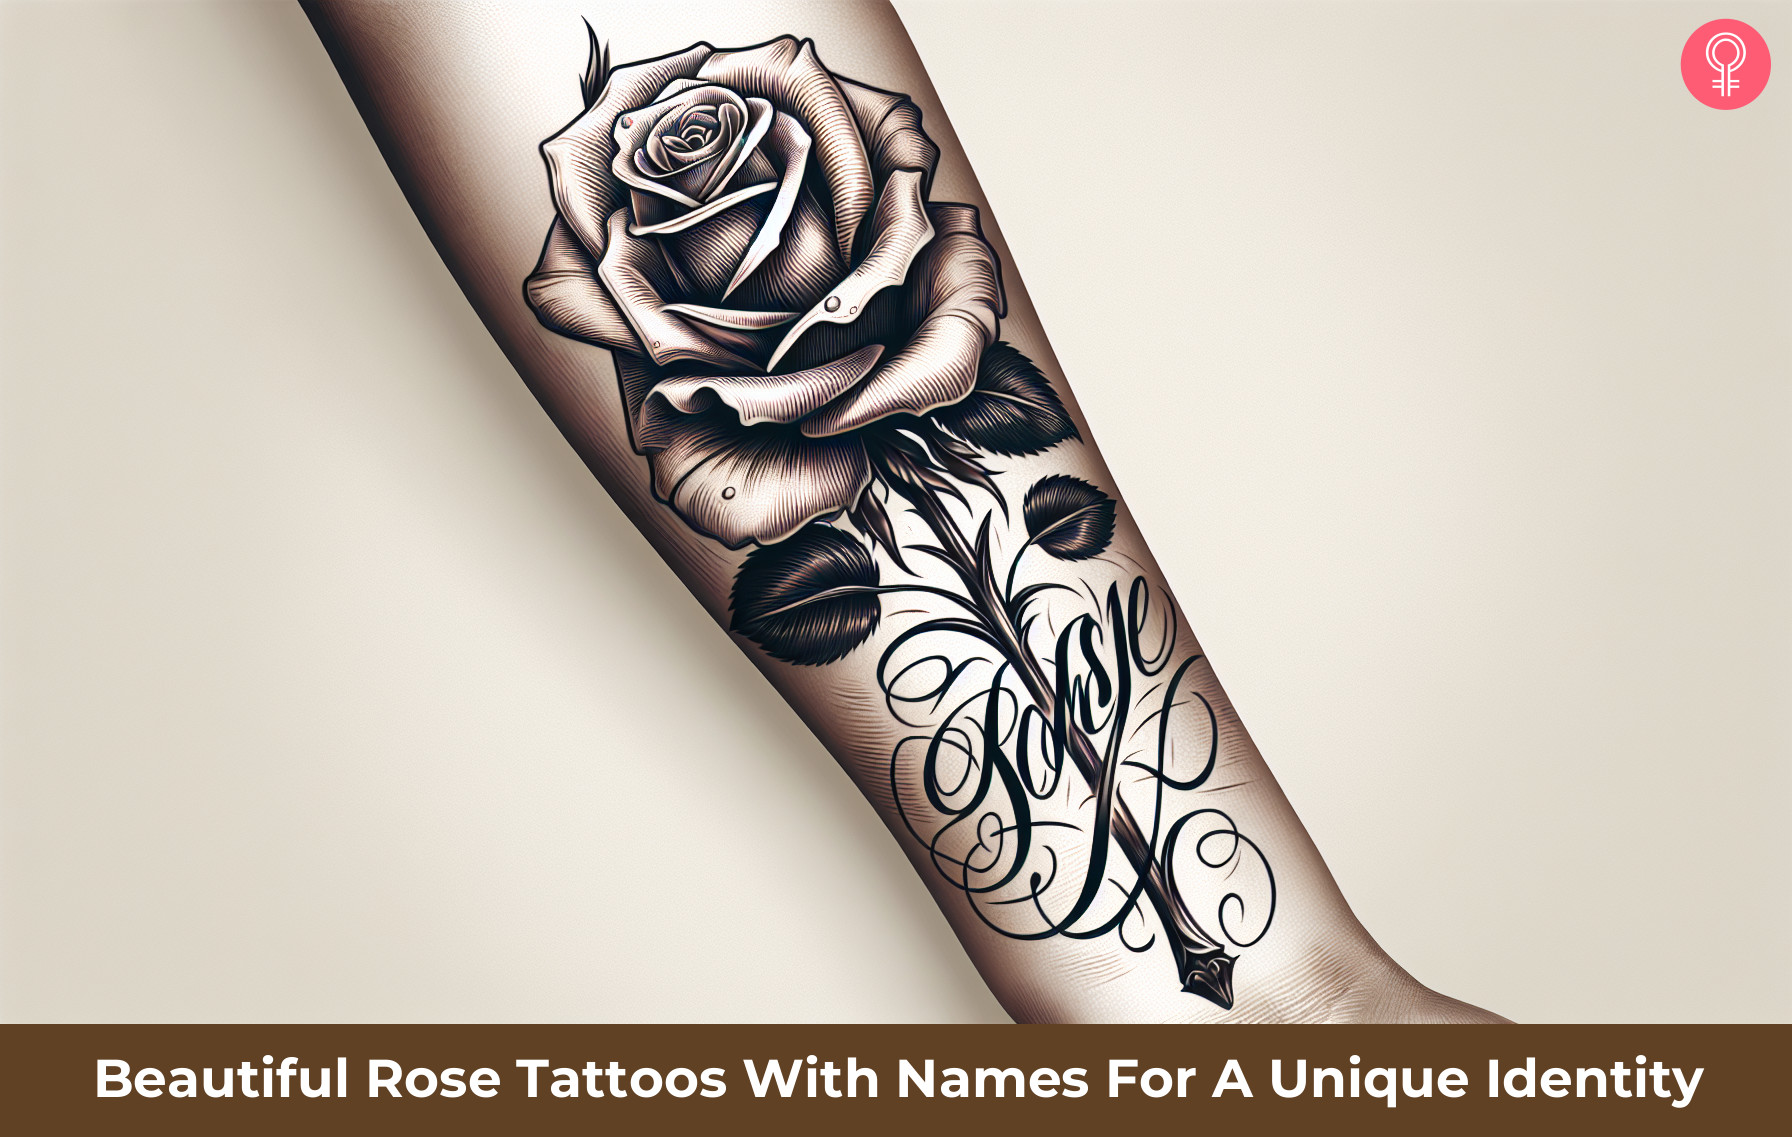 Beautiful Memorial rose shoulder tattoo | Tattoo Portfolio | Pinterest |  Tattoos, Shoulder tattoo, Rose shoulder tattoo